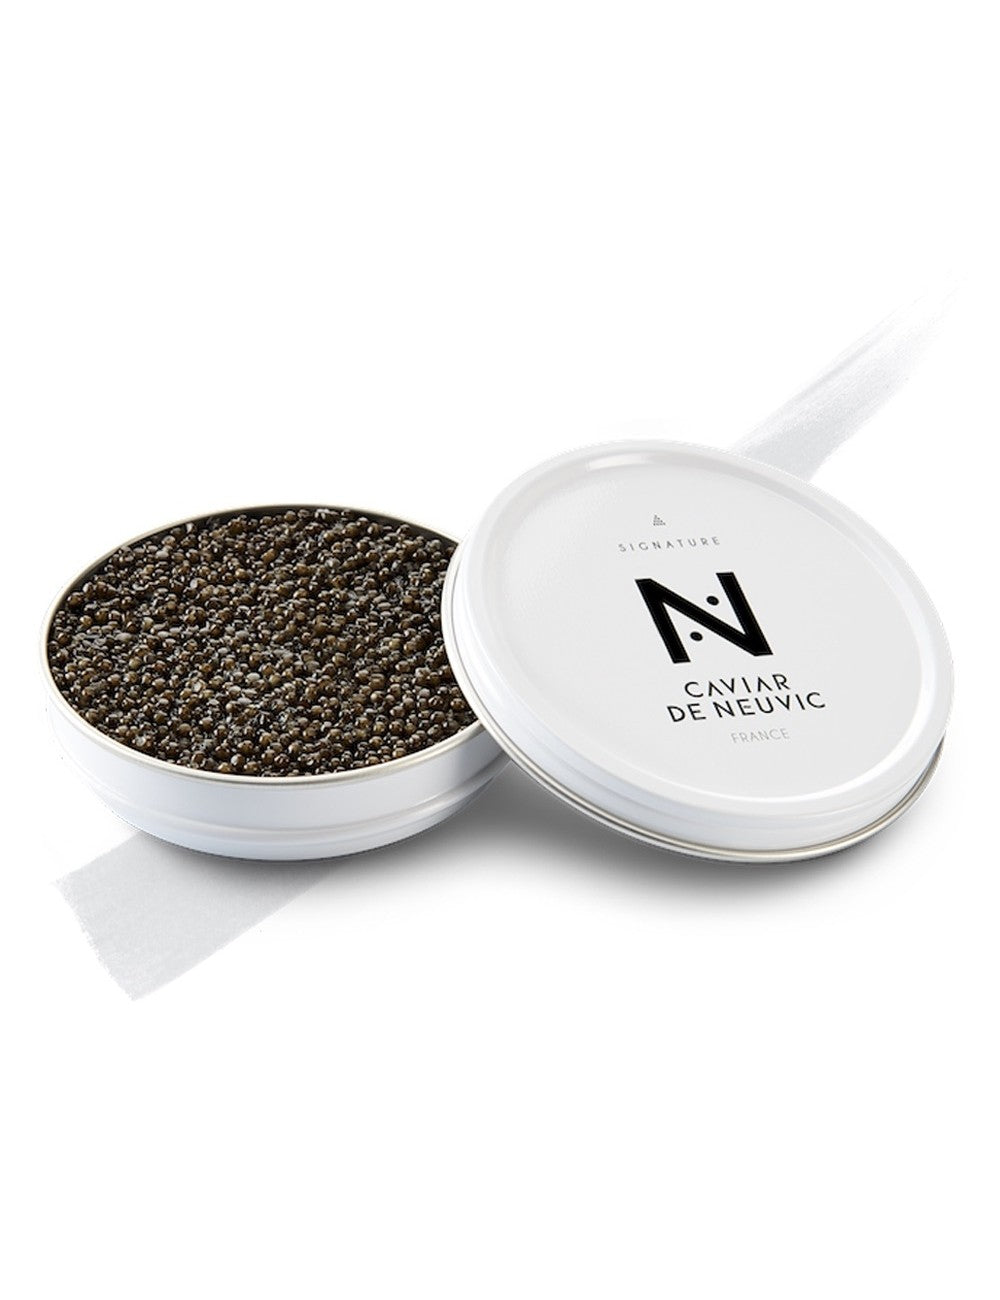 Neuvic Caviar Baeri Signature, 100 gr